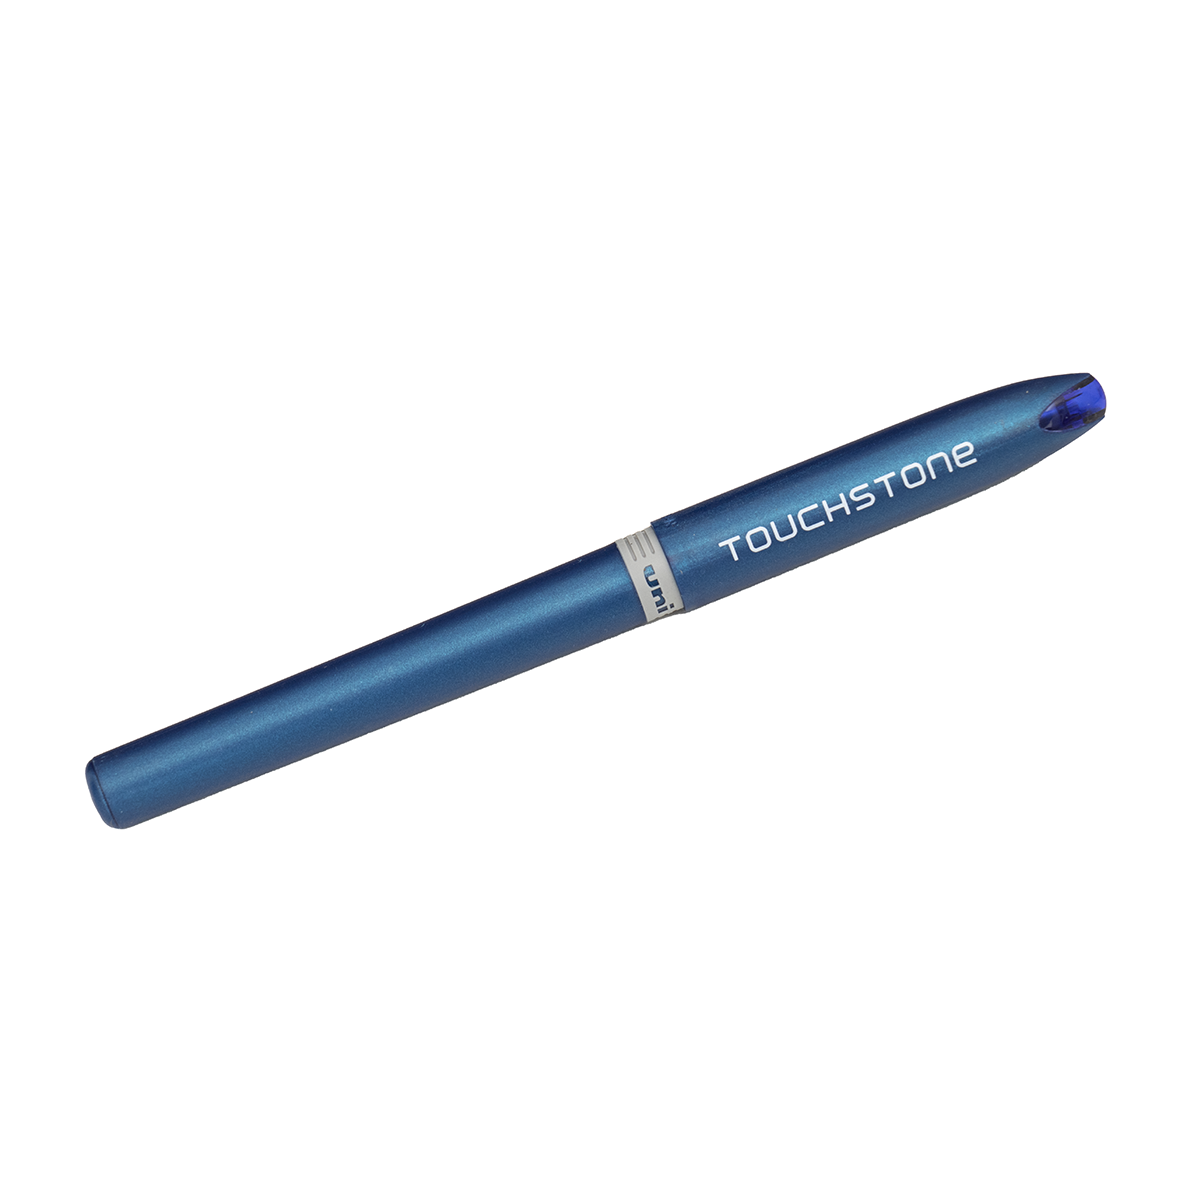 Uni-Ball Roller Grip Gel Pen with Blue Ink